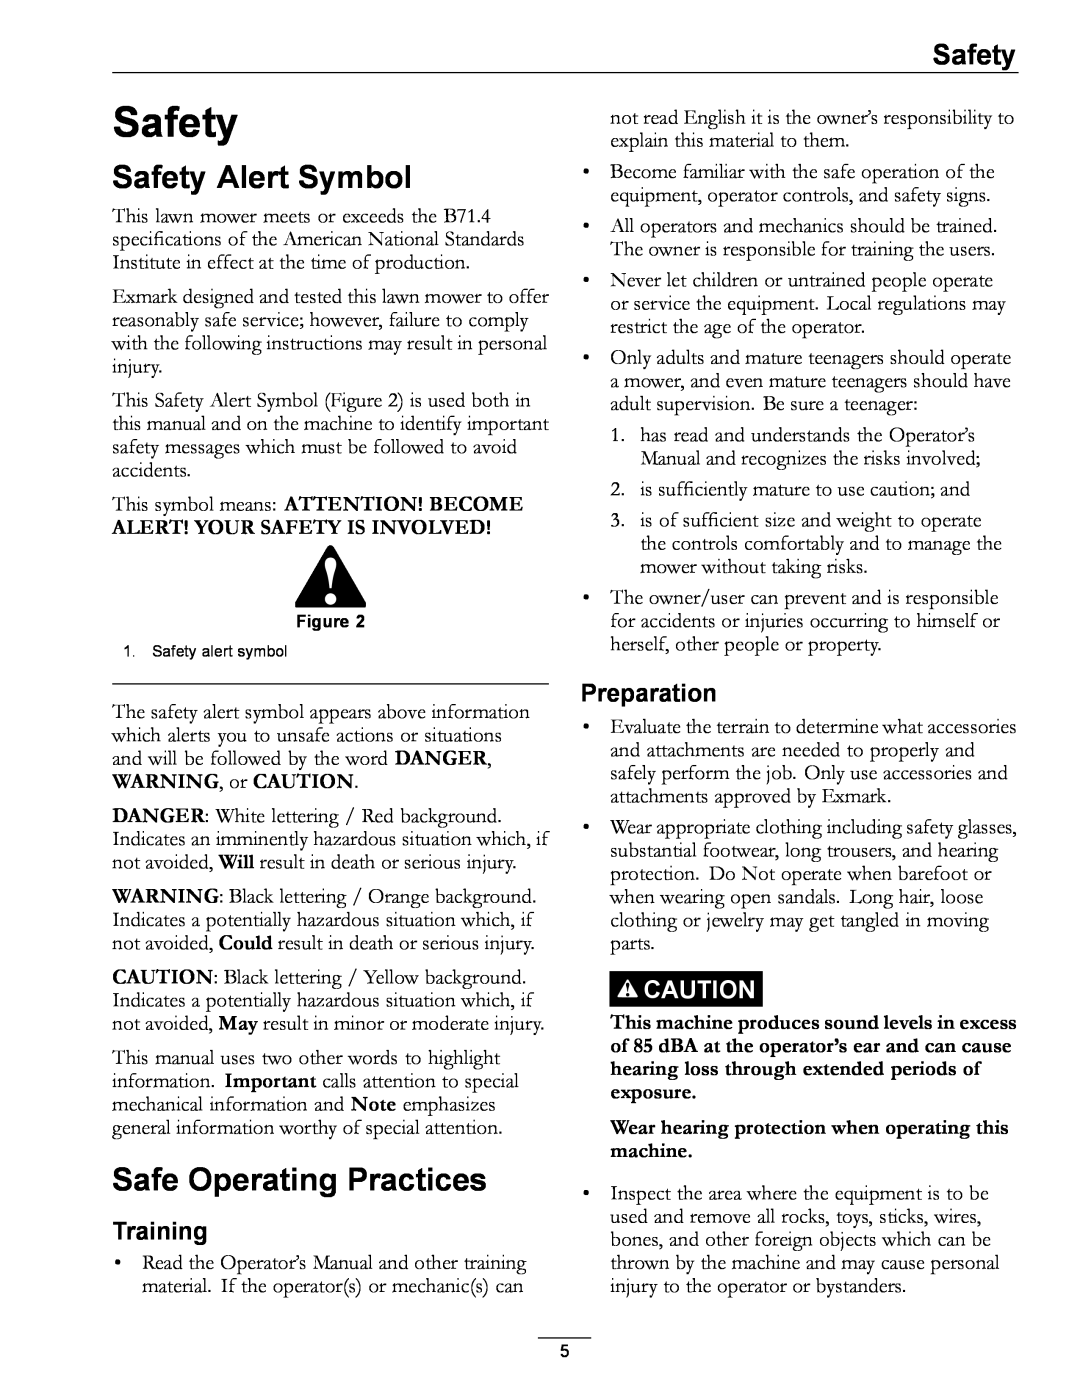 Exmark 4500-689 Safety Alert Symbol, Safe Operating Practices, Training, Preparation, Alert! Your Safety Is Involved 